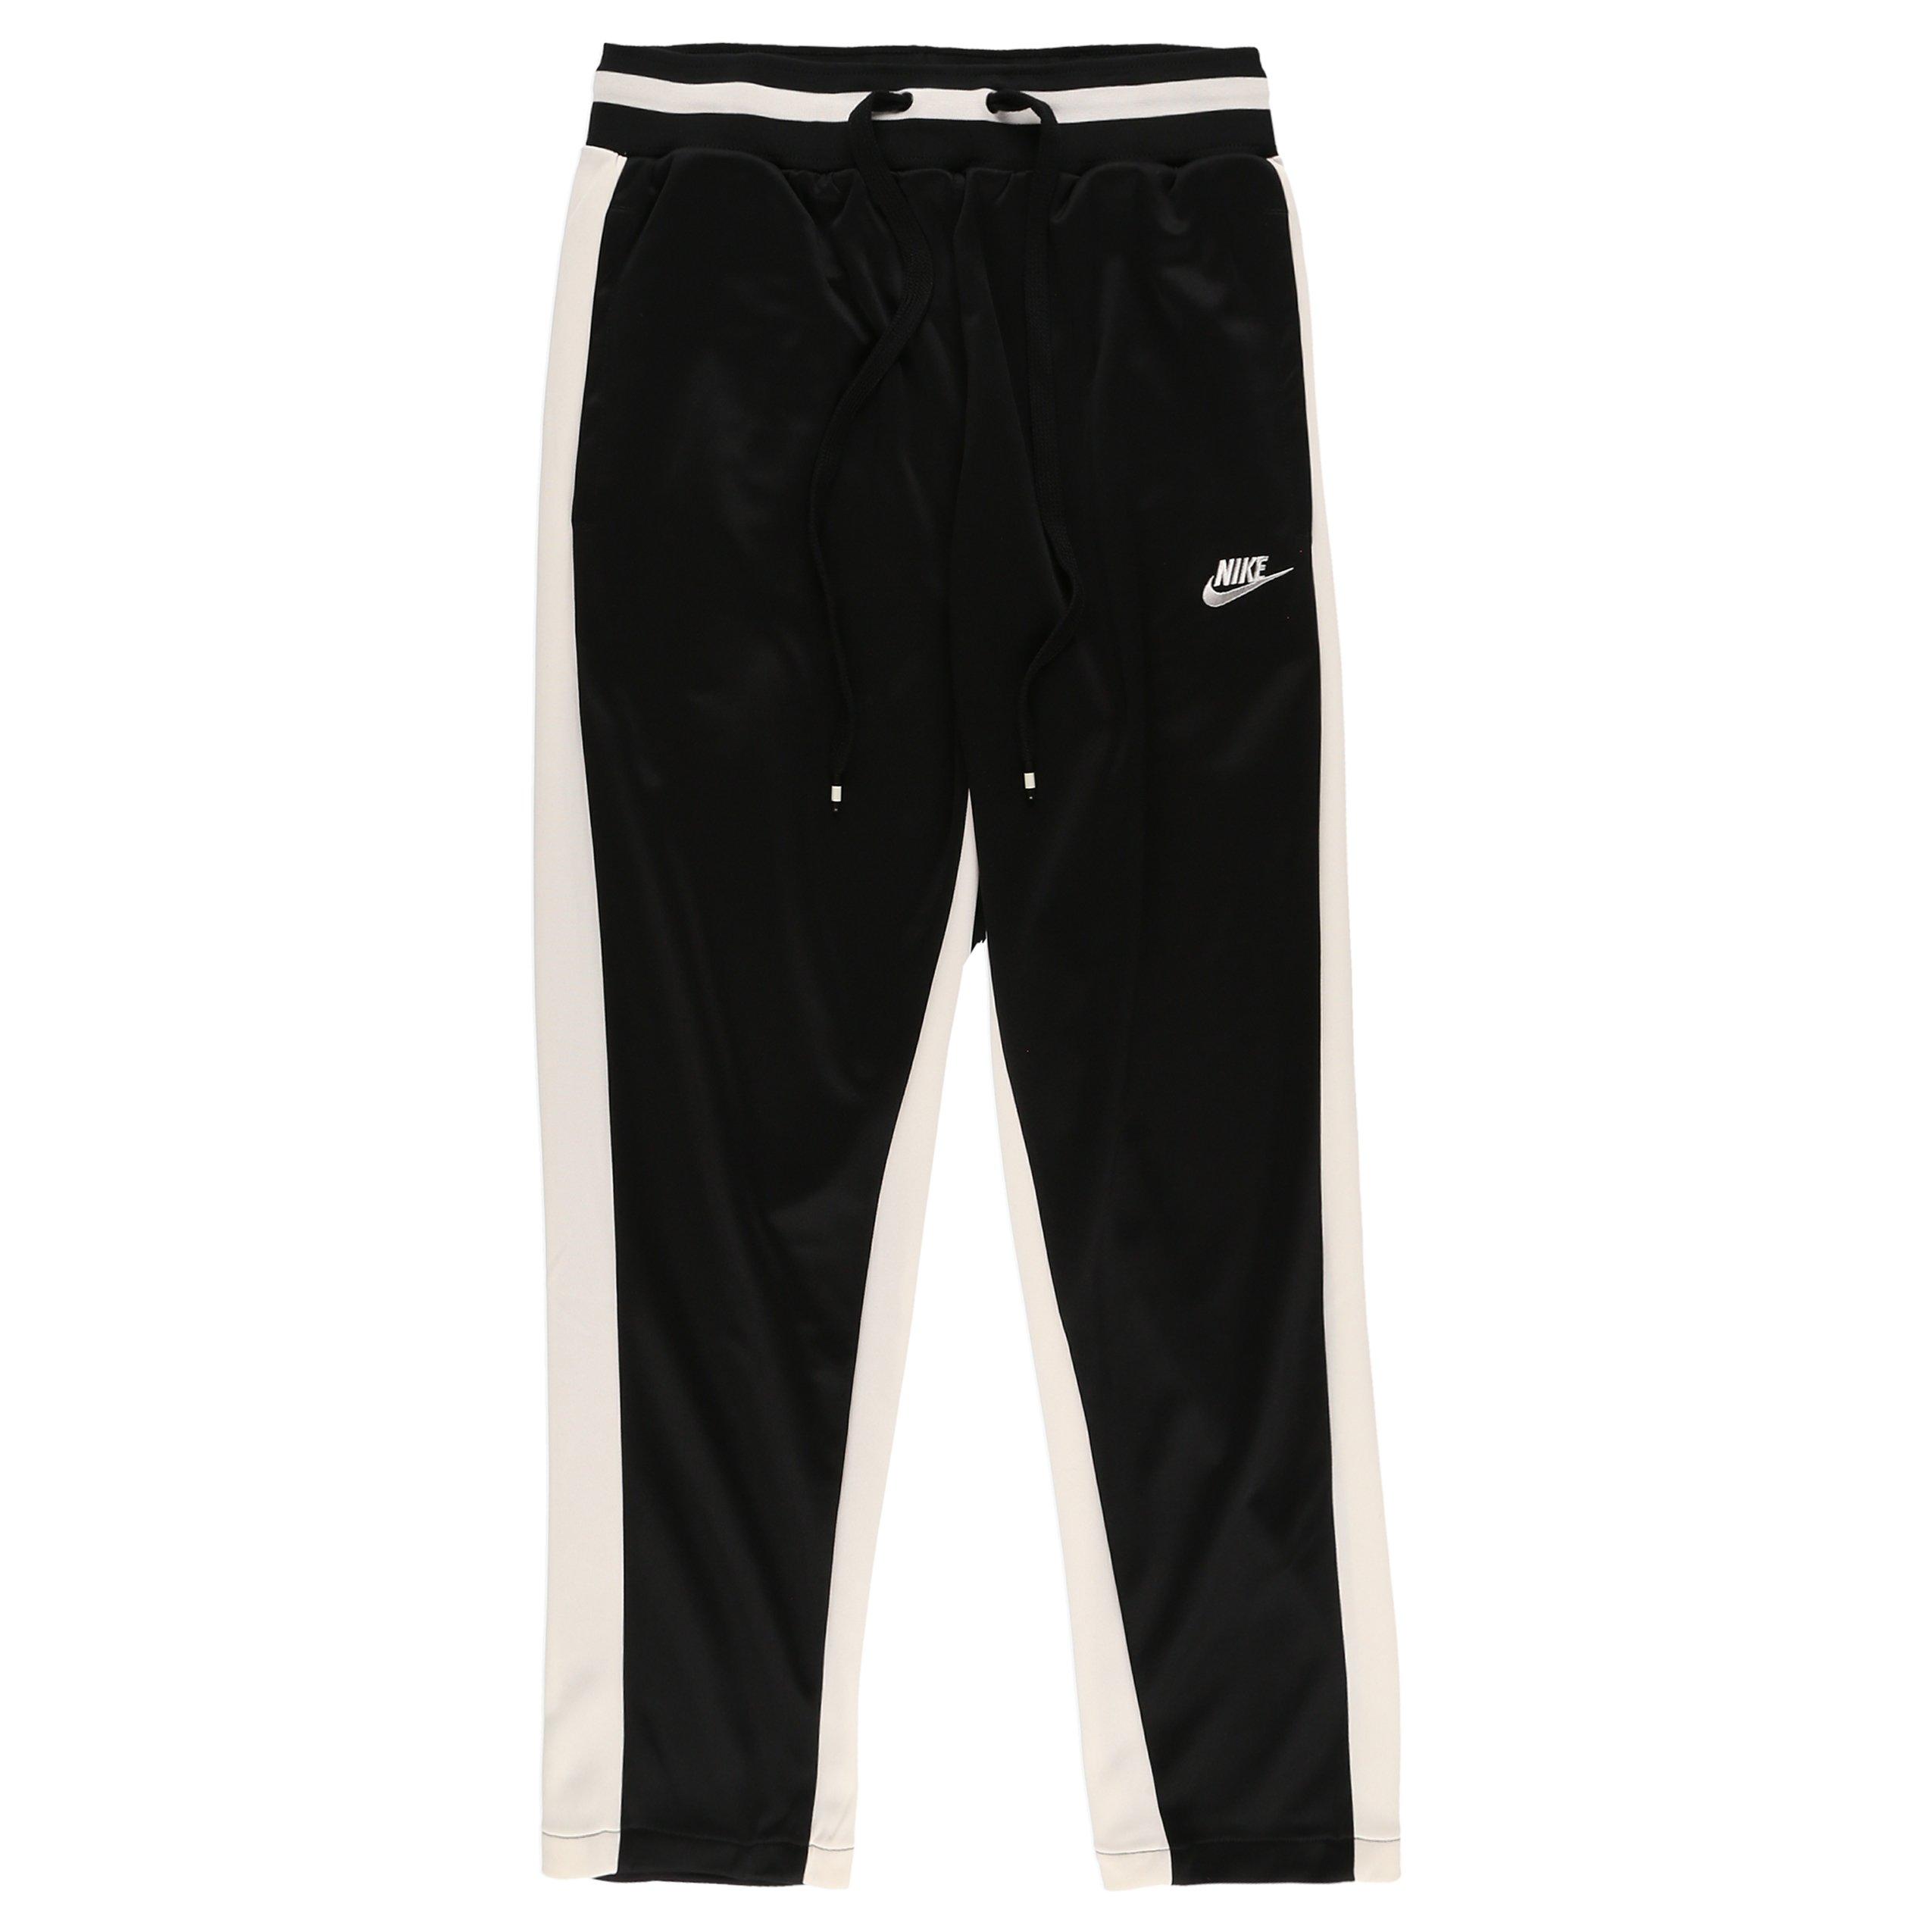 Lyst - Nike Air Track Pants in Black for Men